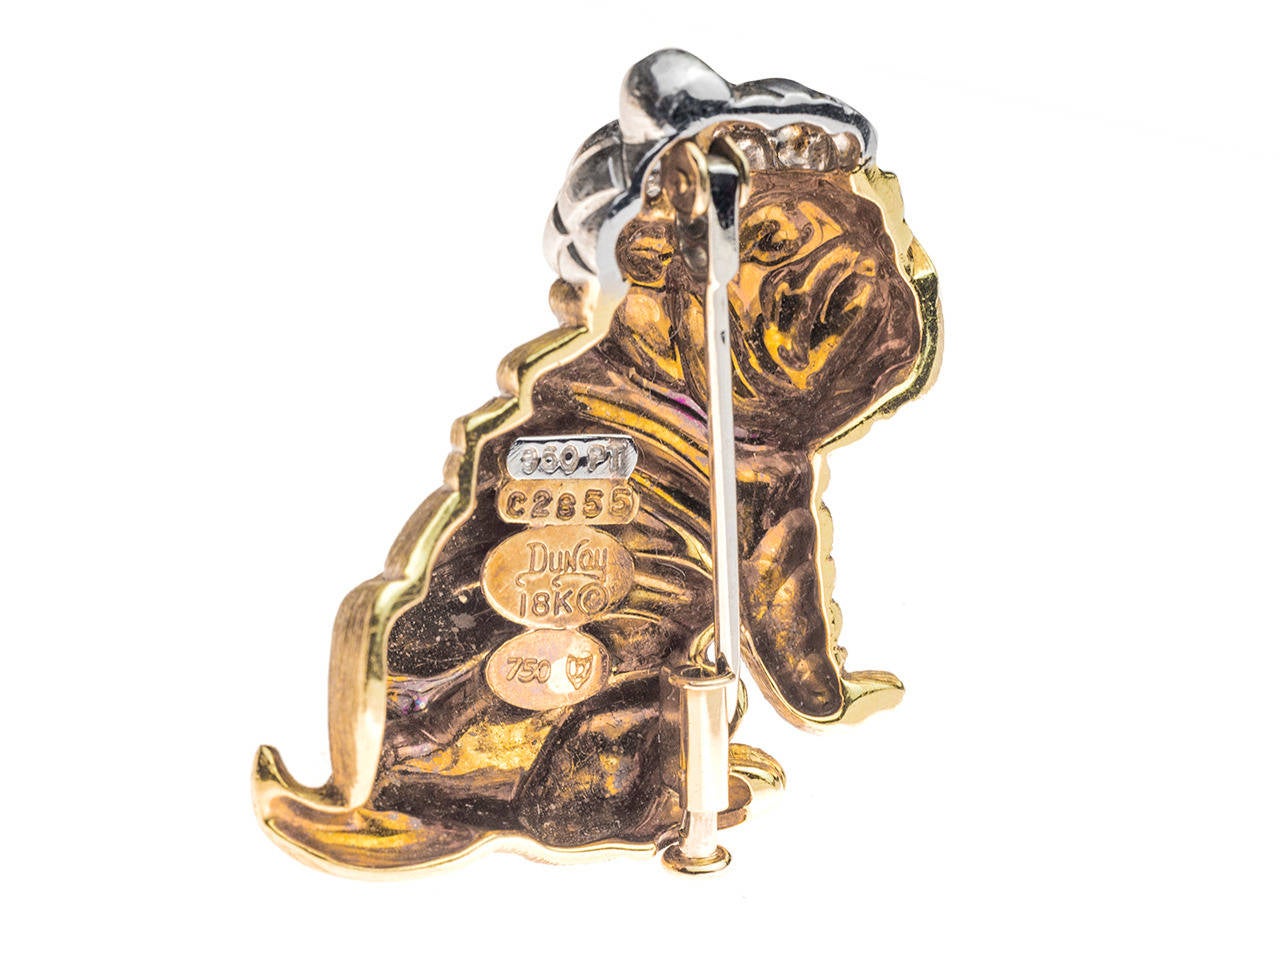 18 karat yellow gold  and platinum pin depicting a Sharpei dog wearing a Chinese hat. Signed DUNAY 18K 750 C2855  950 PT.